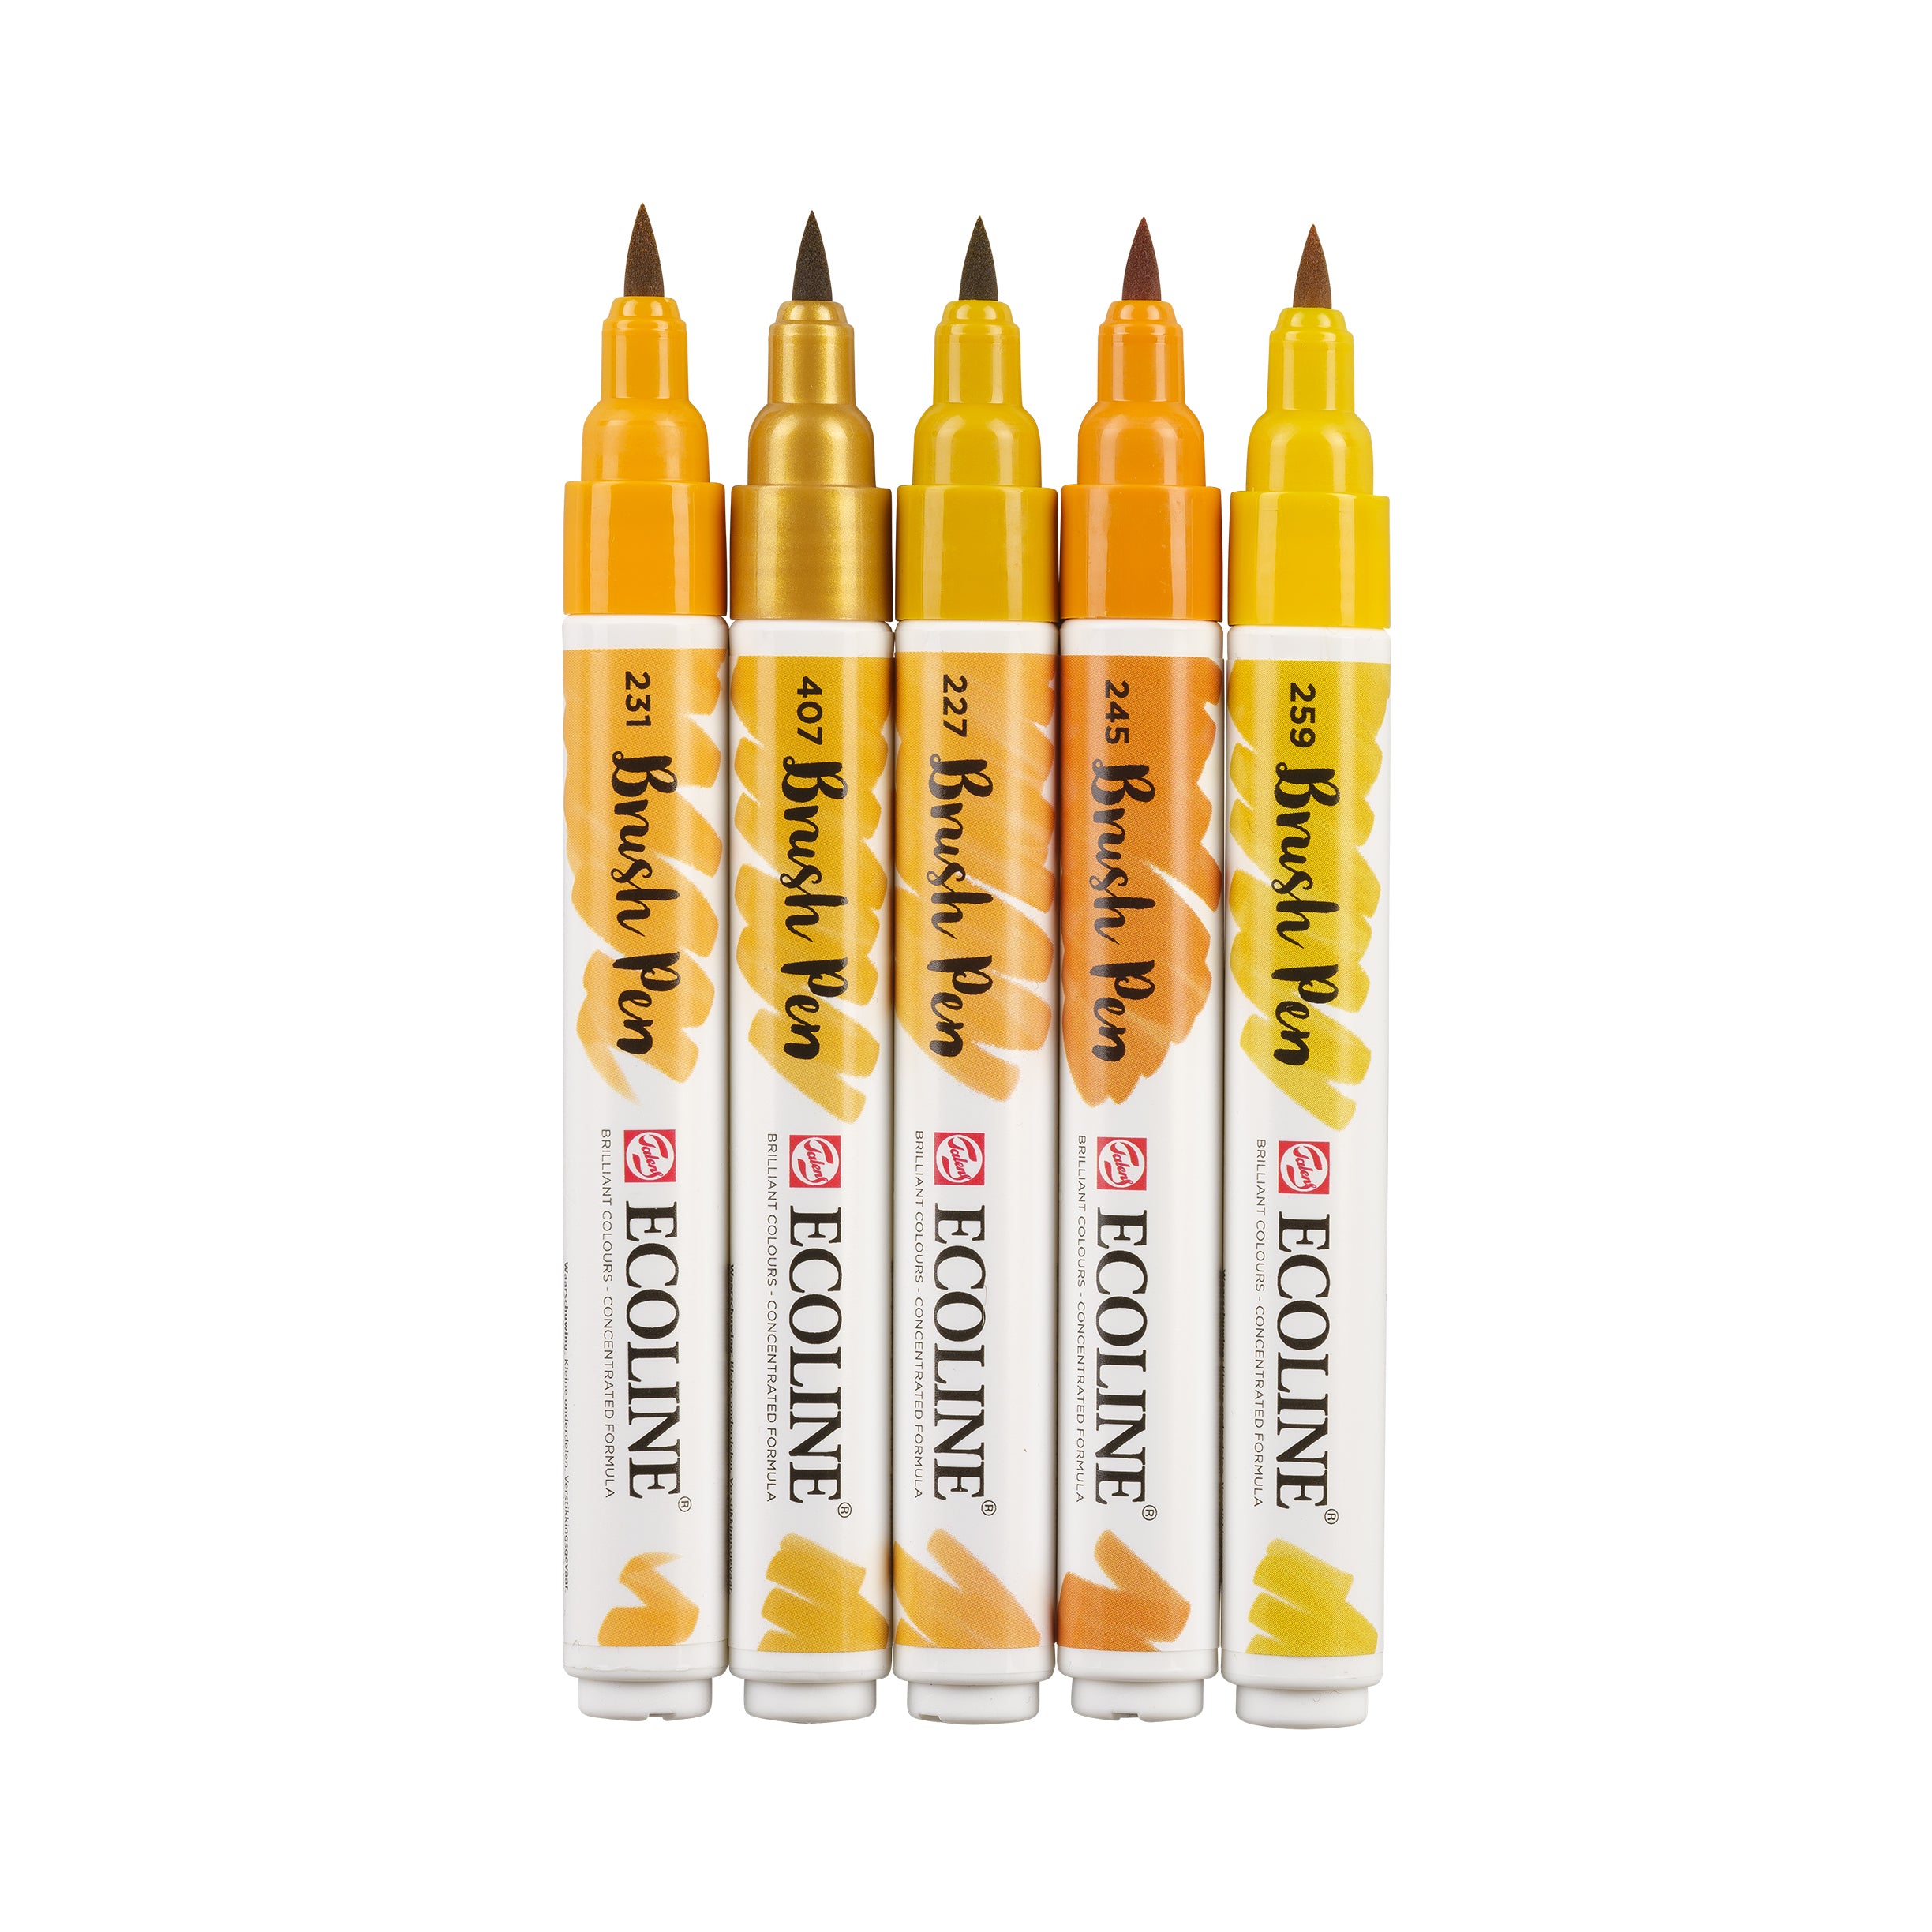 5-Color Grey Ecoline Brush Pen Set